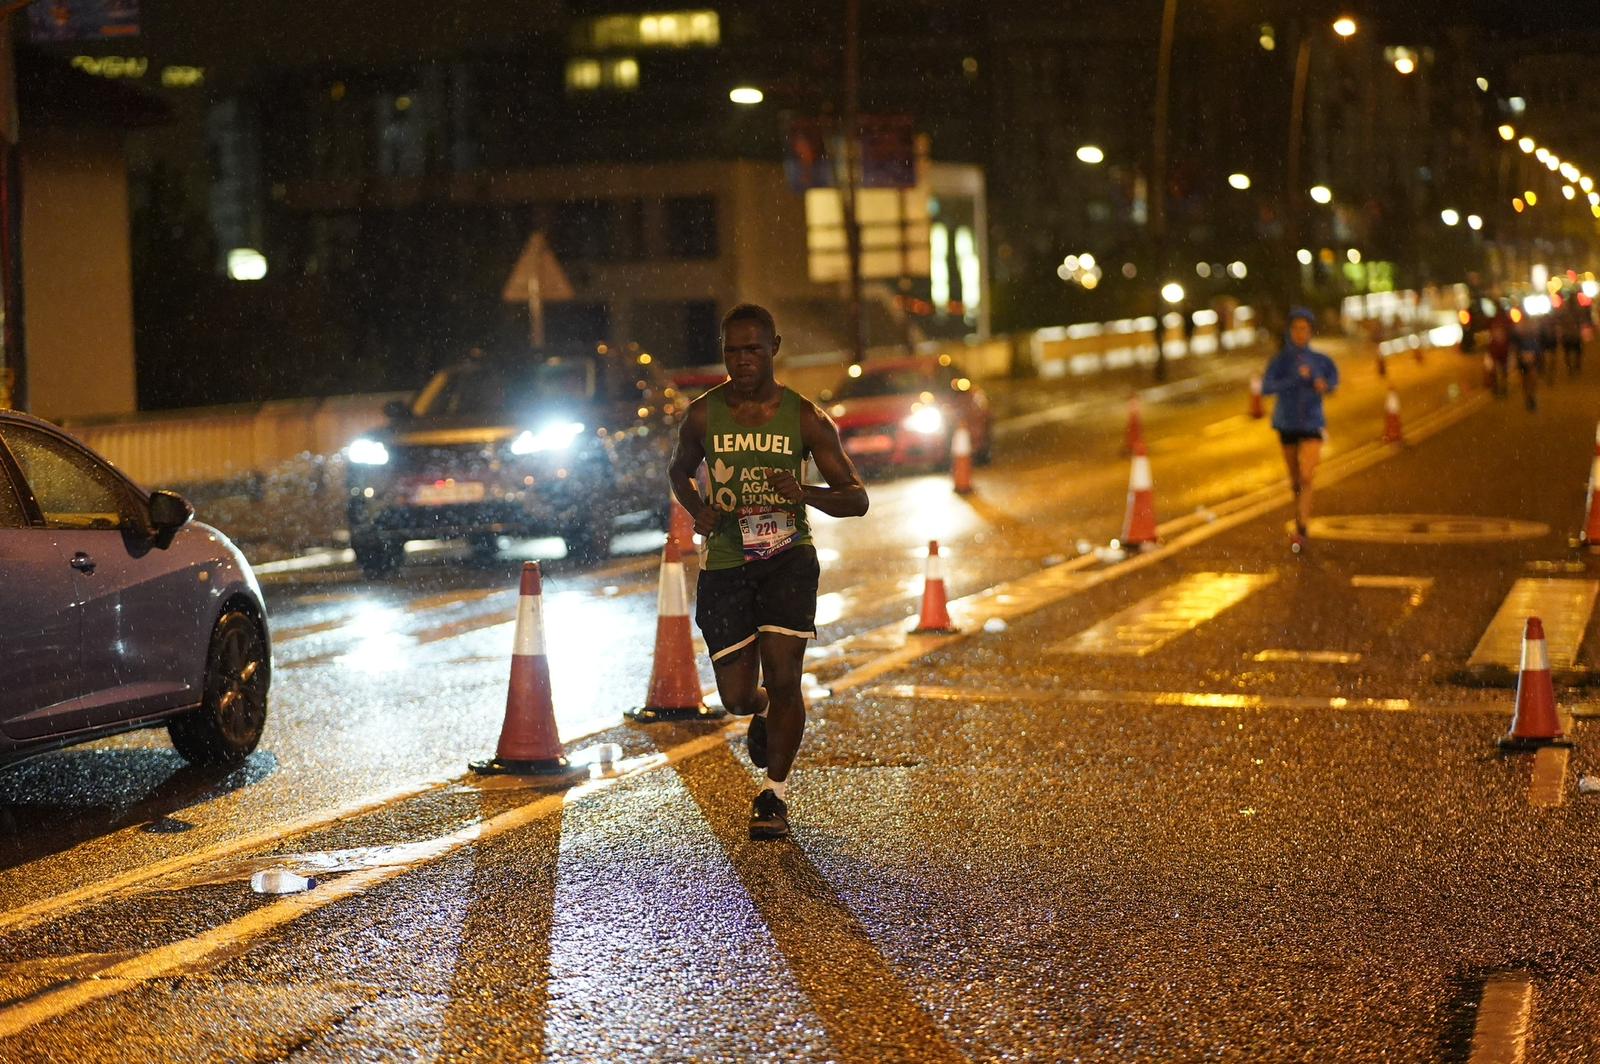 Lemuel Crentsil runs a marathon to raise funds for charity.